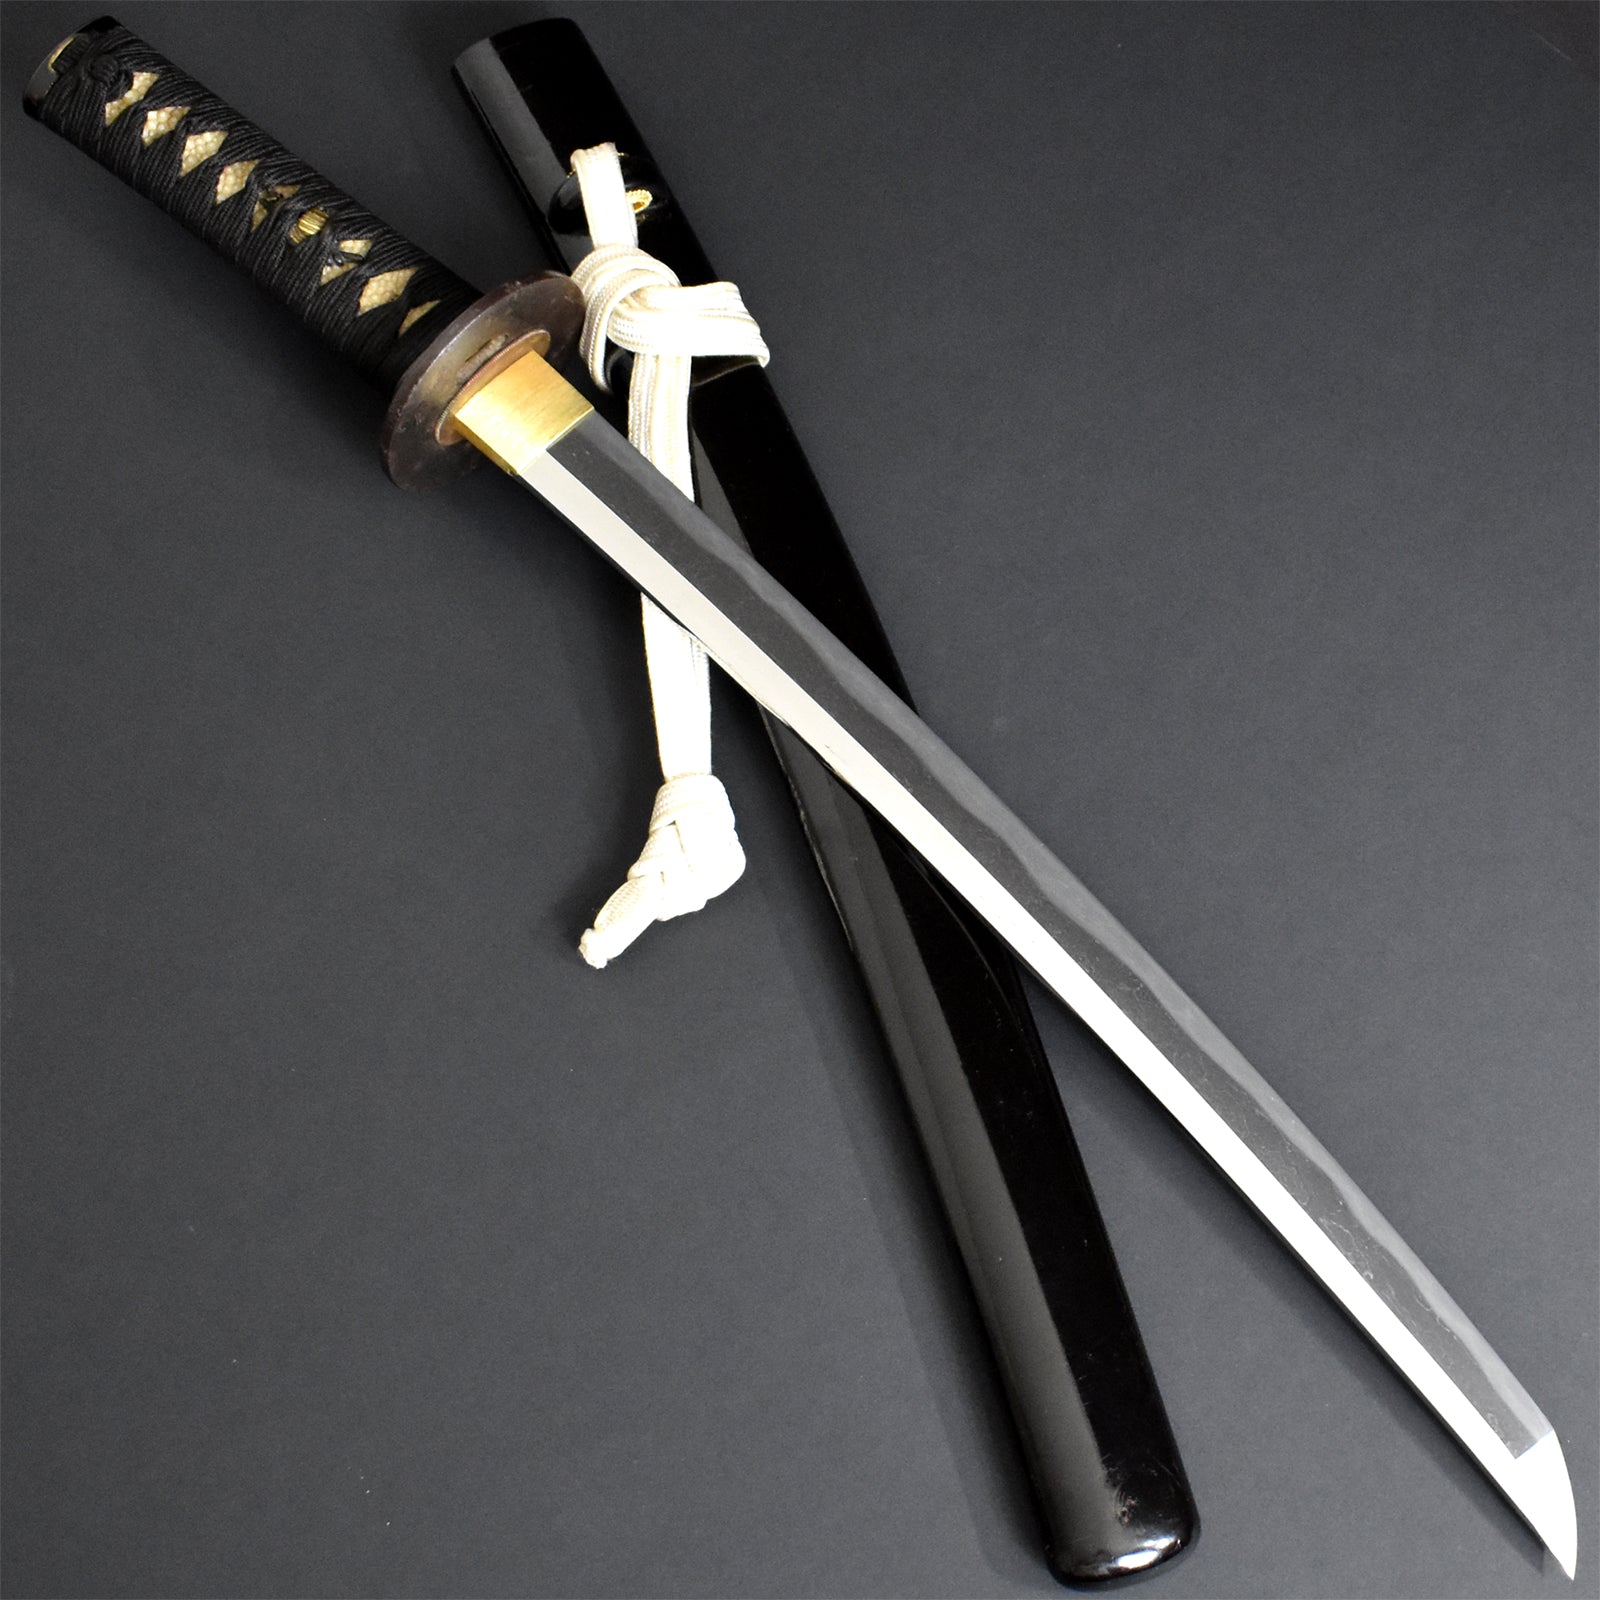 My new wakizashi #sword #nerd #katana #anime #manga - YouTube